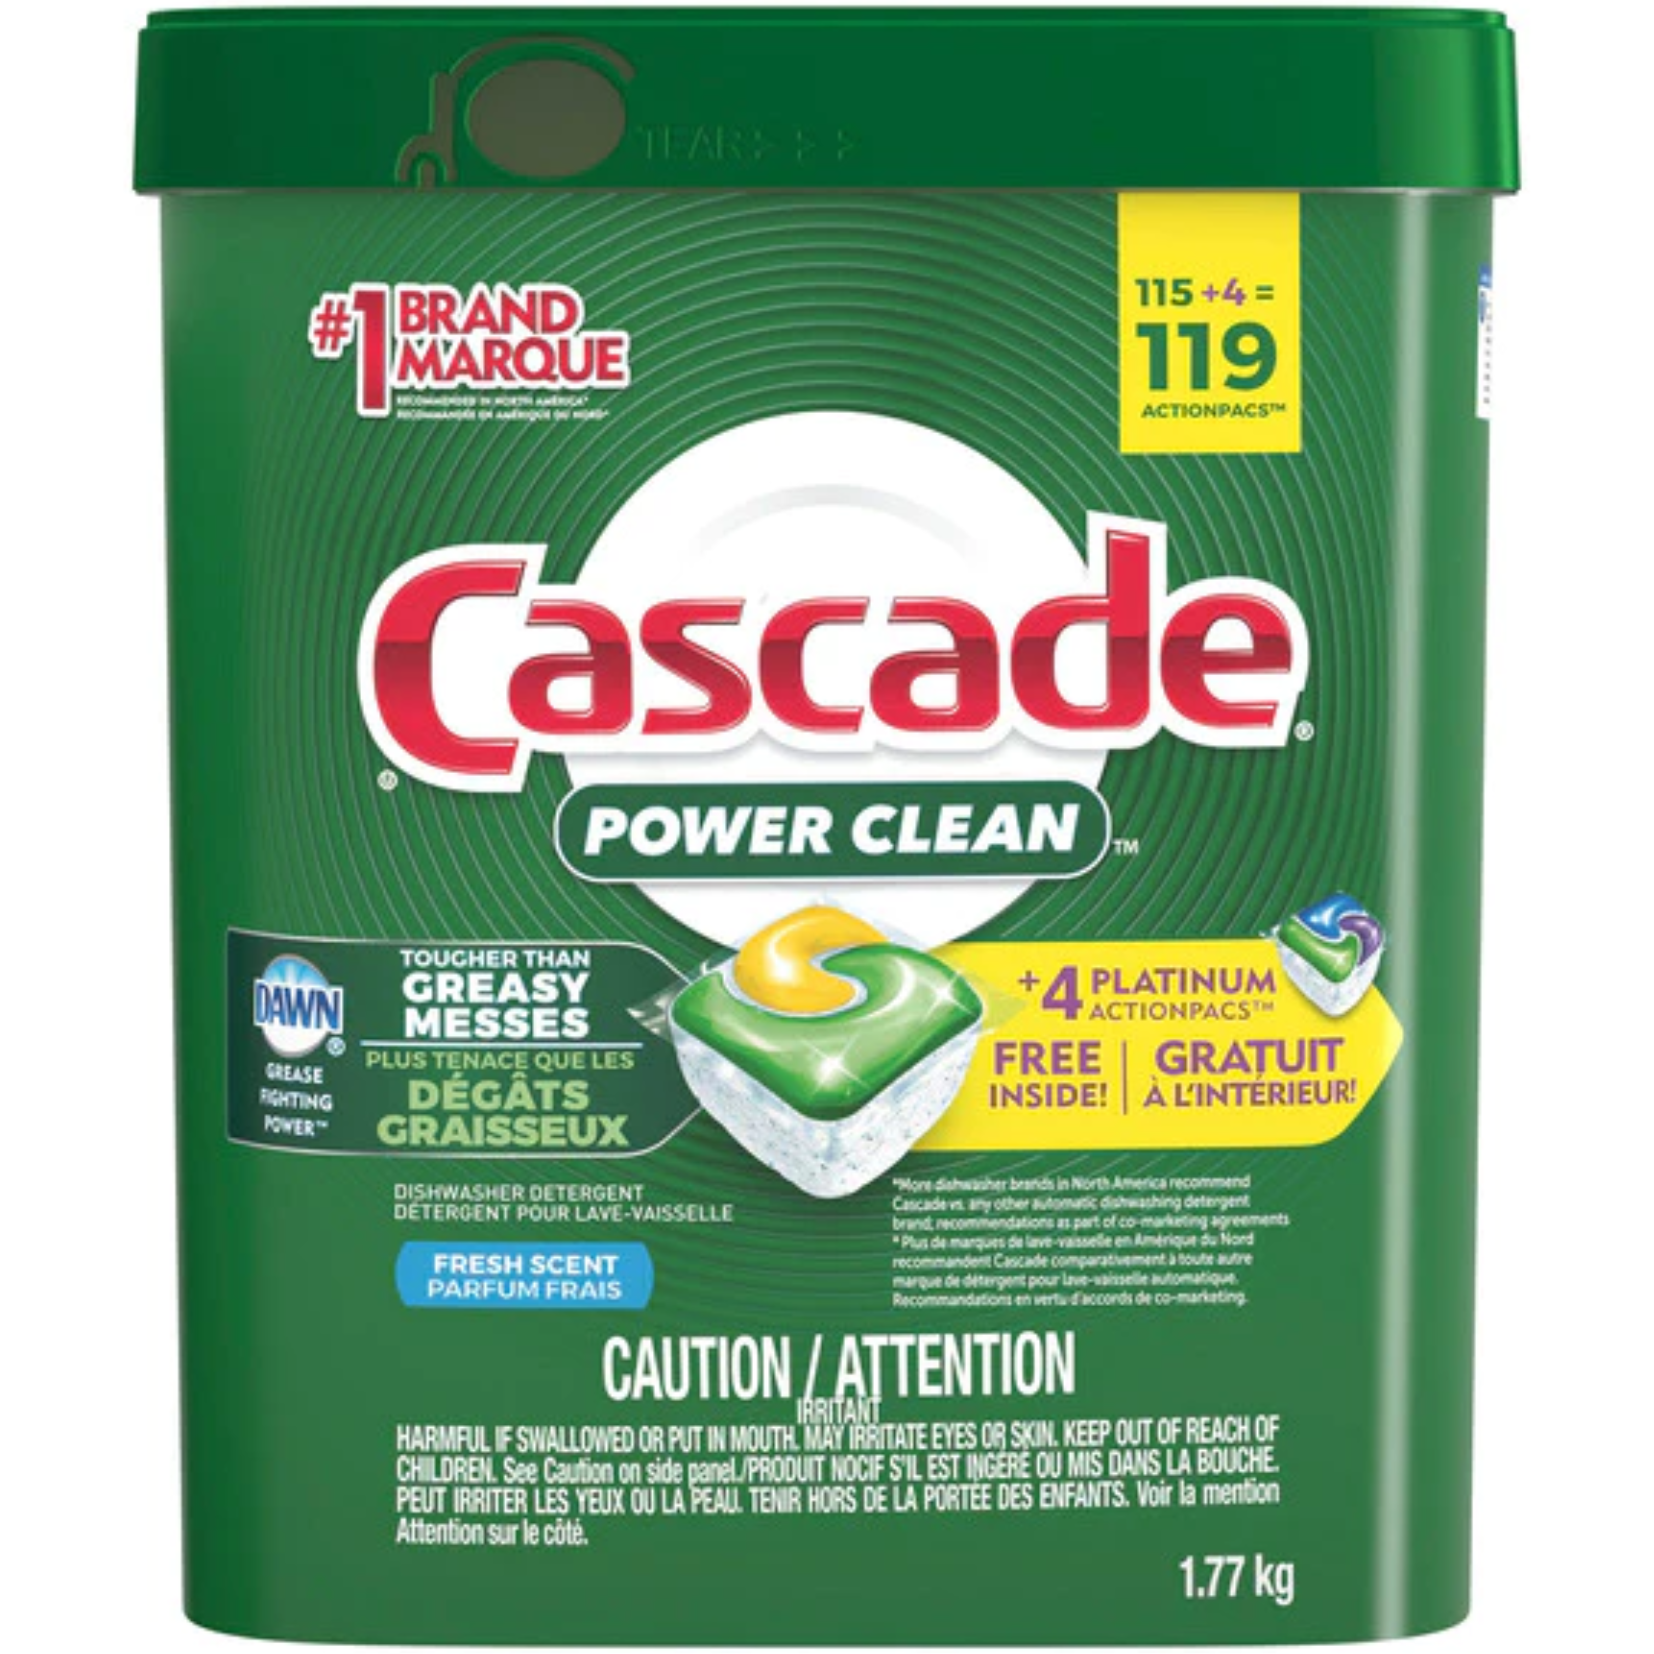 Cascade Power Clean Dishwasher Tabs 119ct